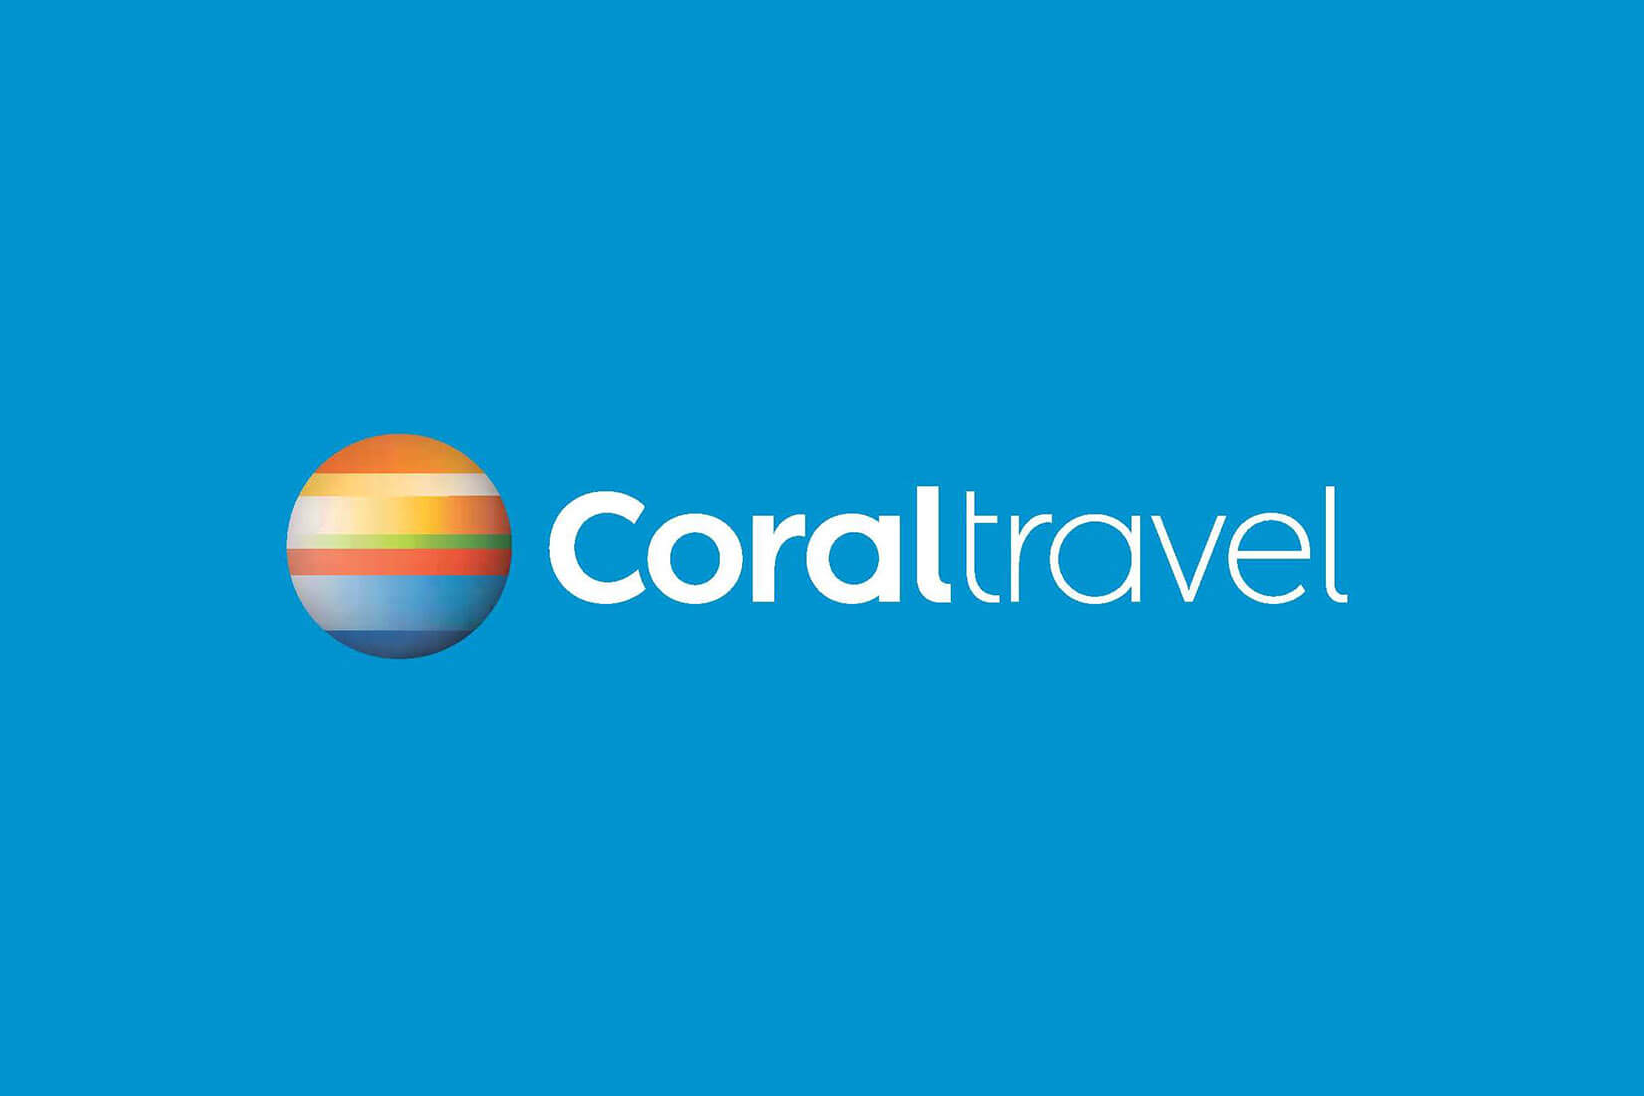 1 coral travel. Корал Тревел. Coral Travel лого. Coral Travel туроператор. Логотип компании Корал Тревел.